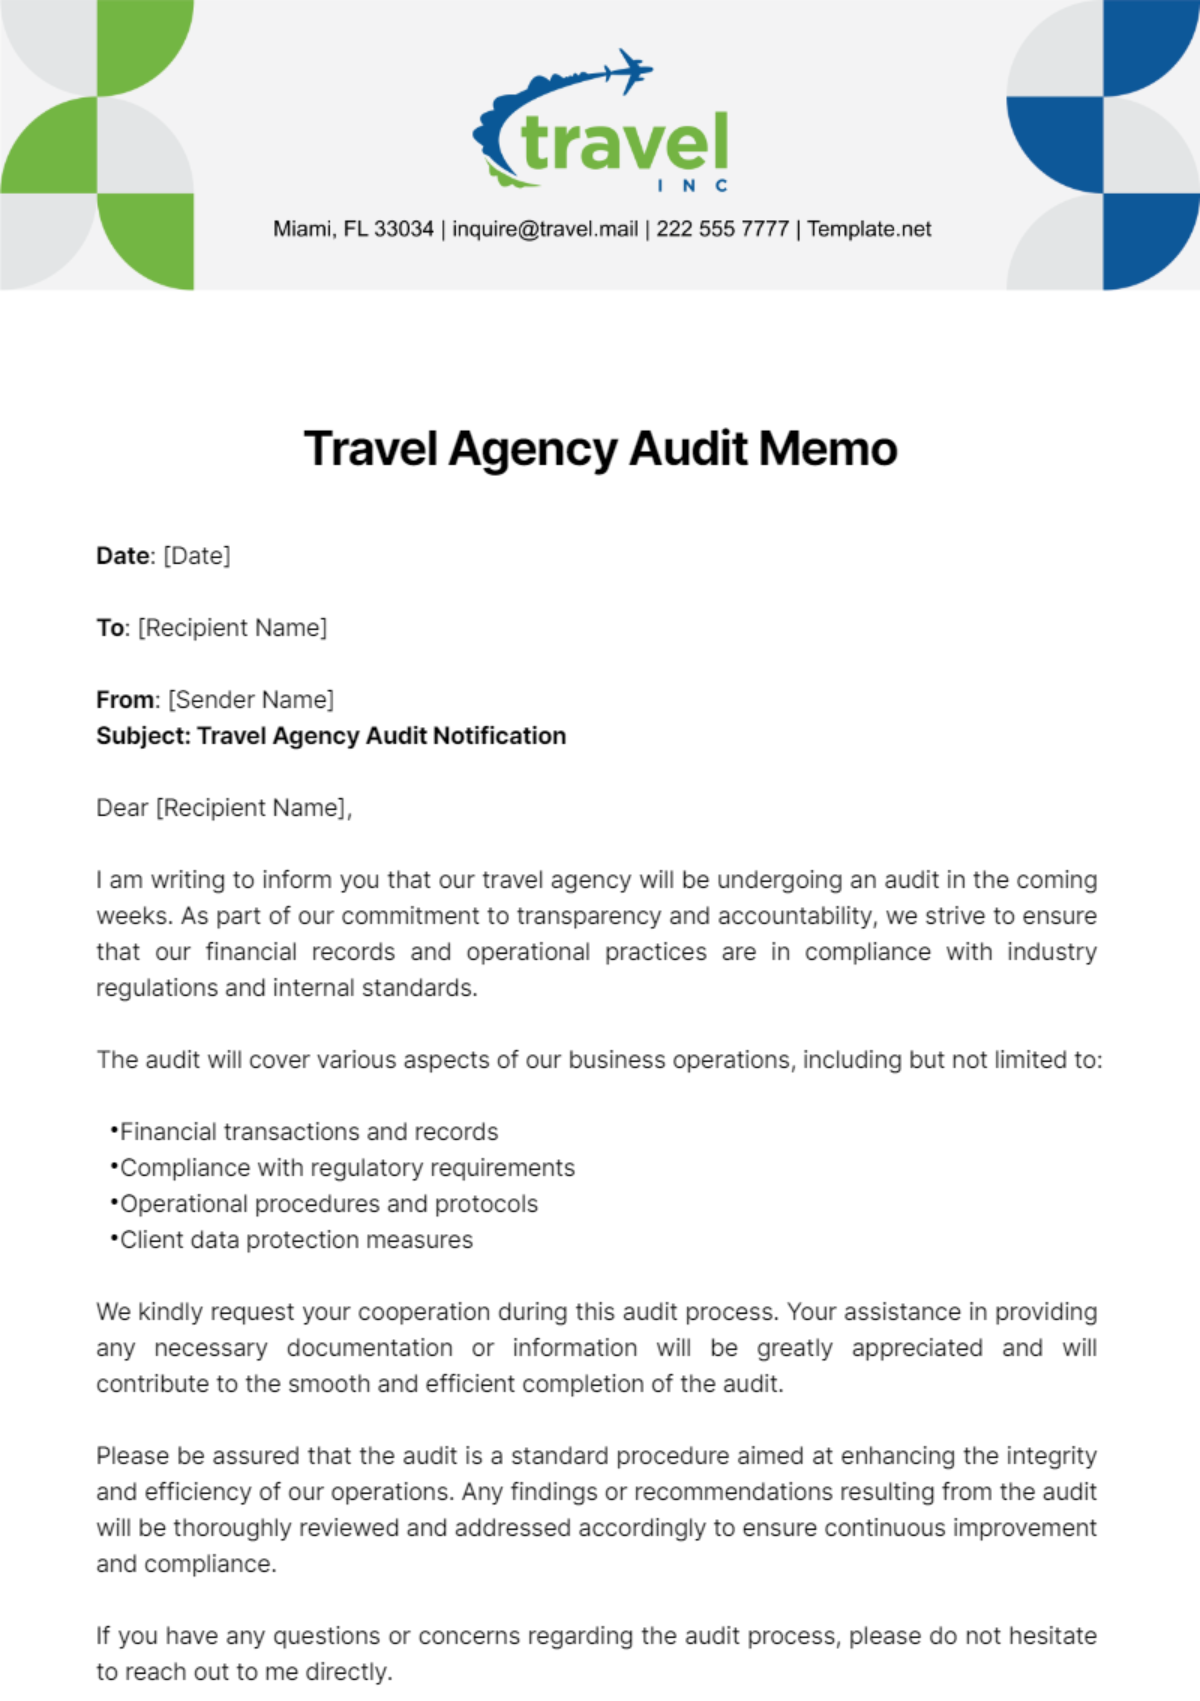 Travel Agency Audit Memo Template